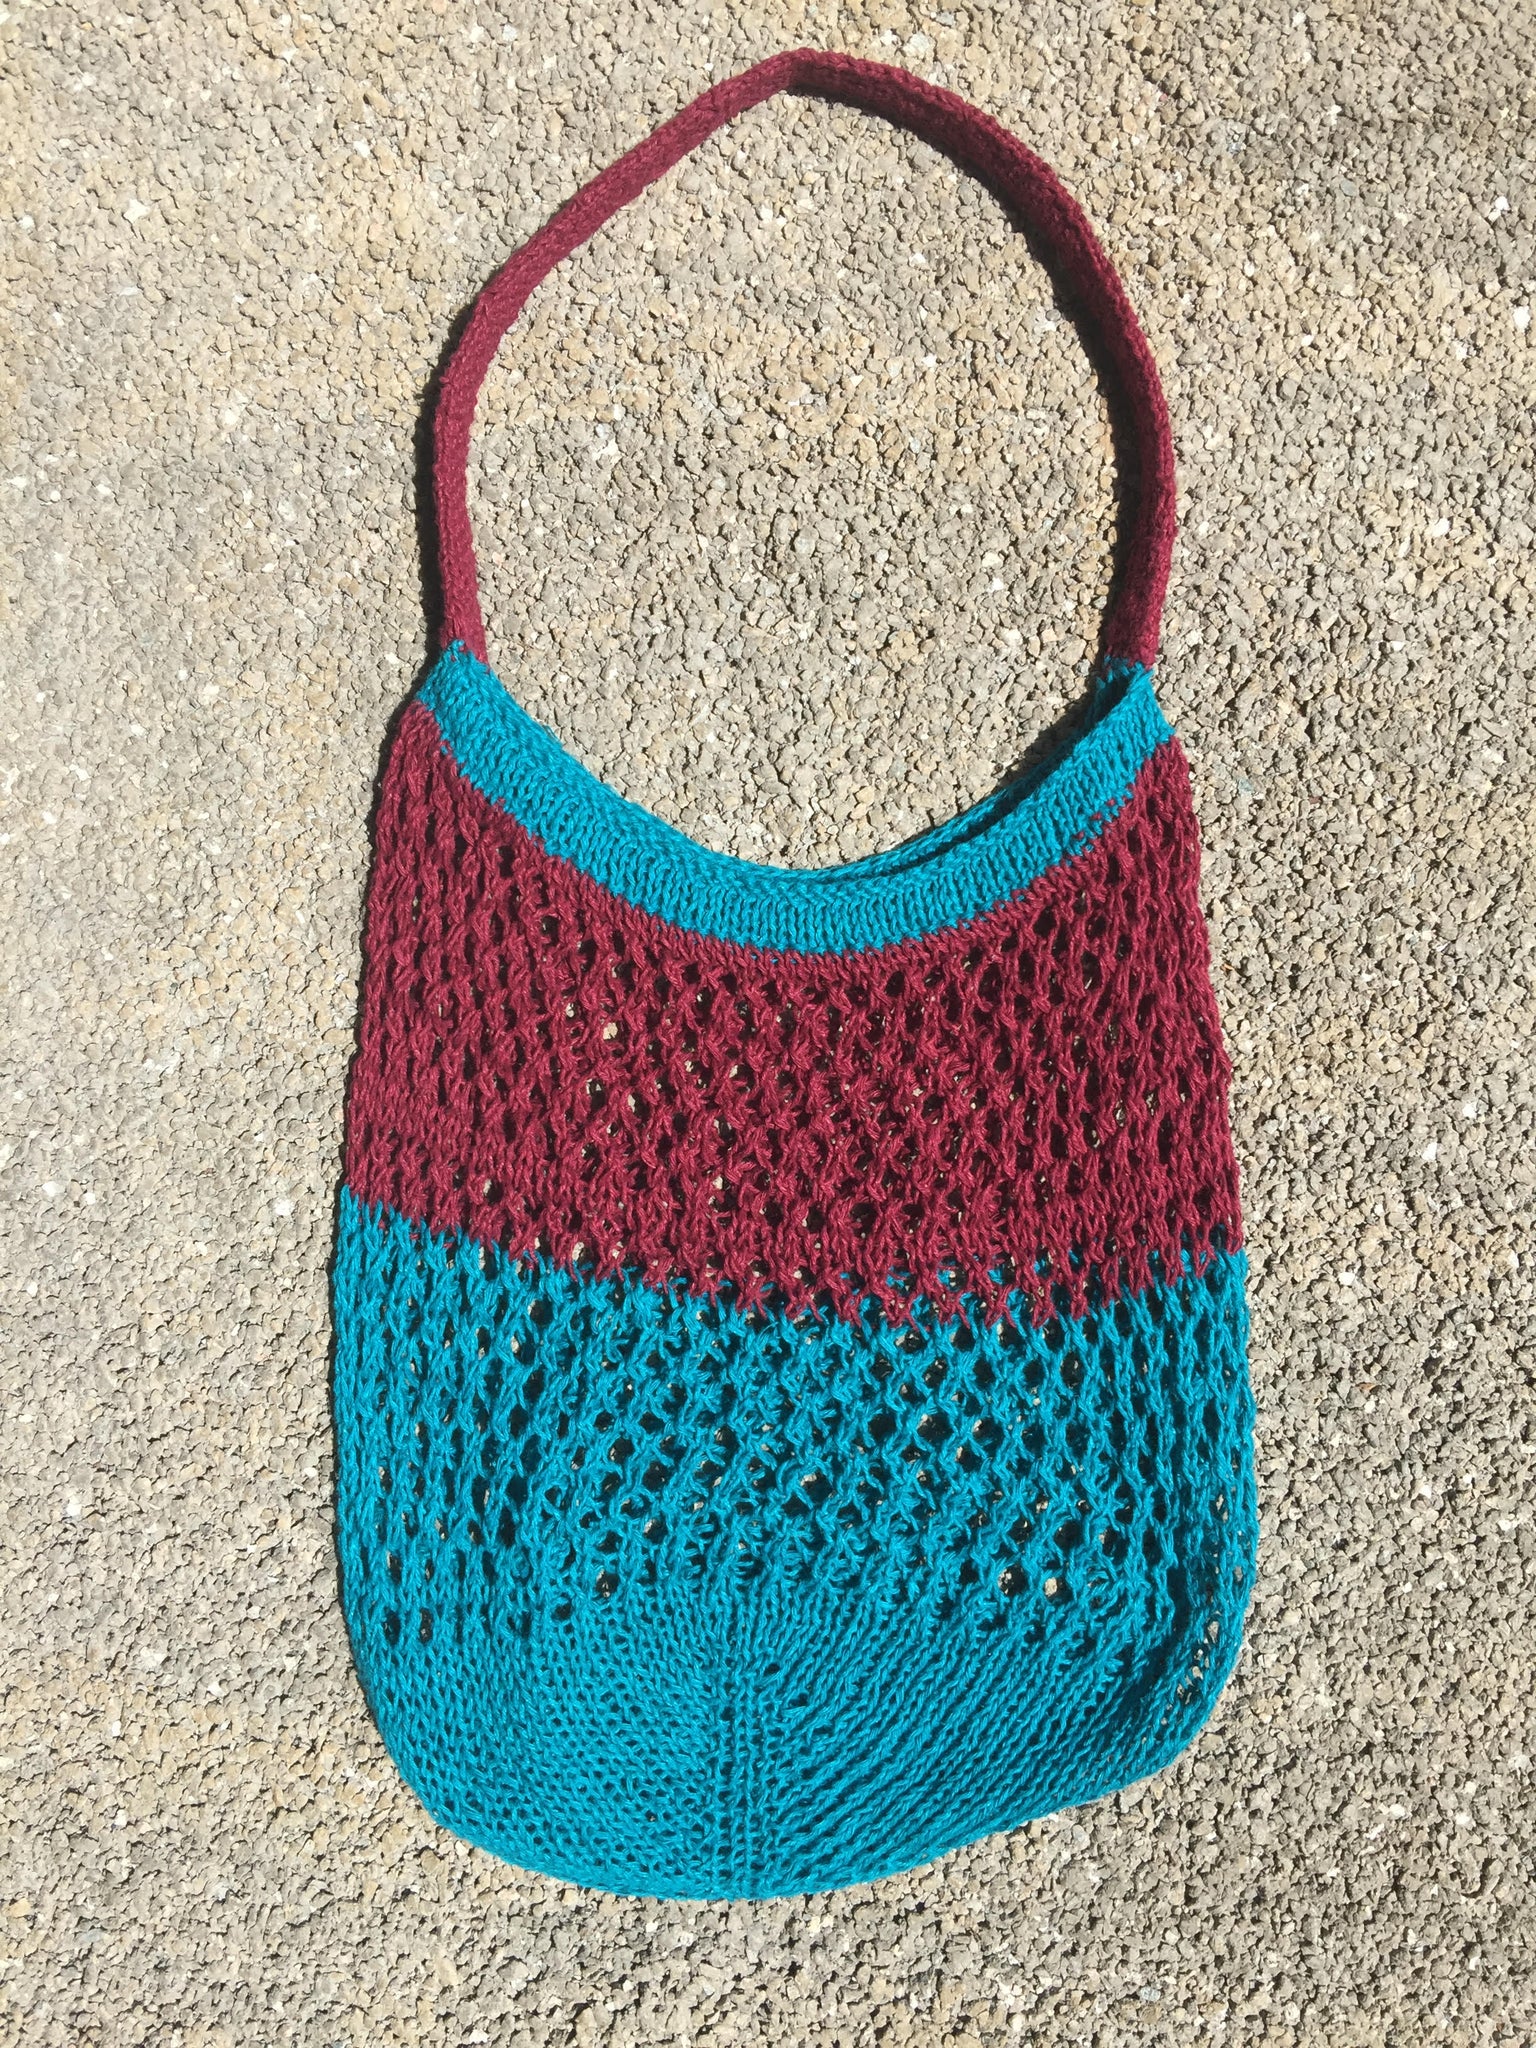 Knitting "Shop Till You Drop!" Market Bag Class